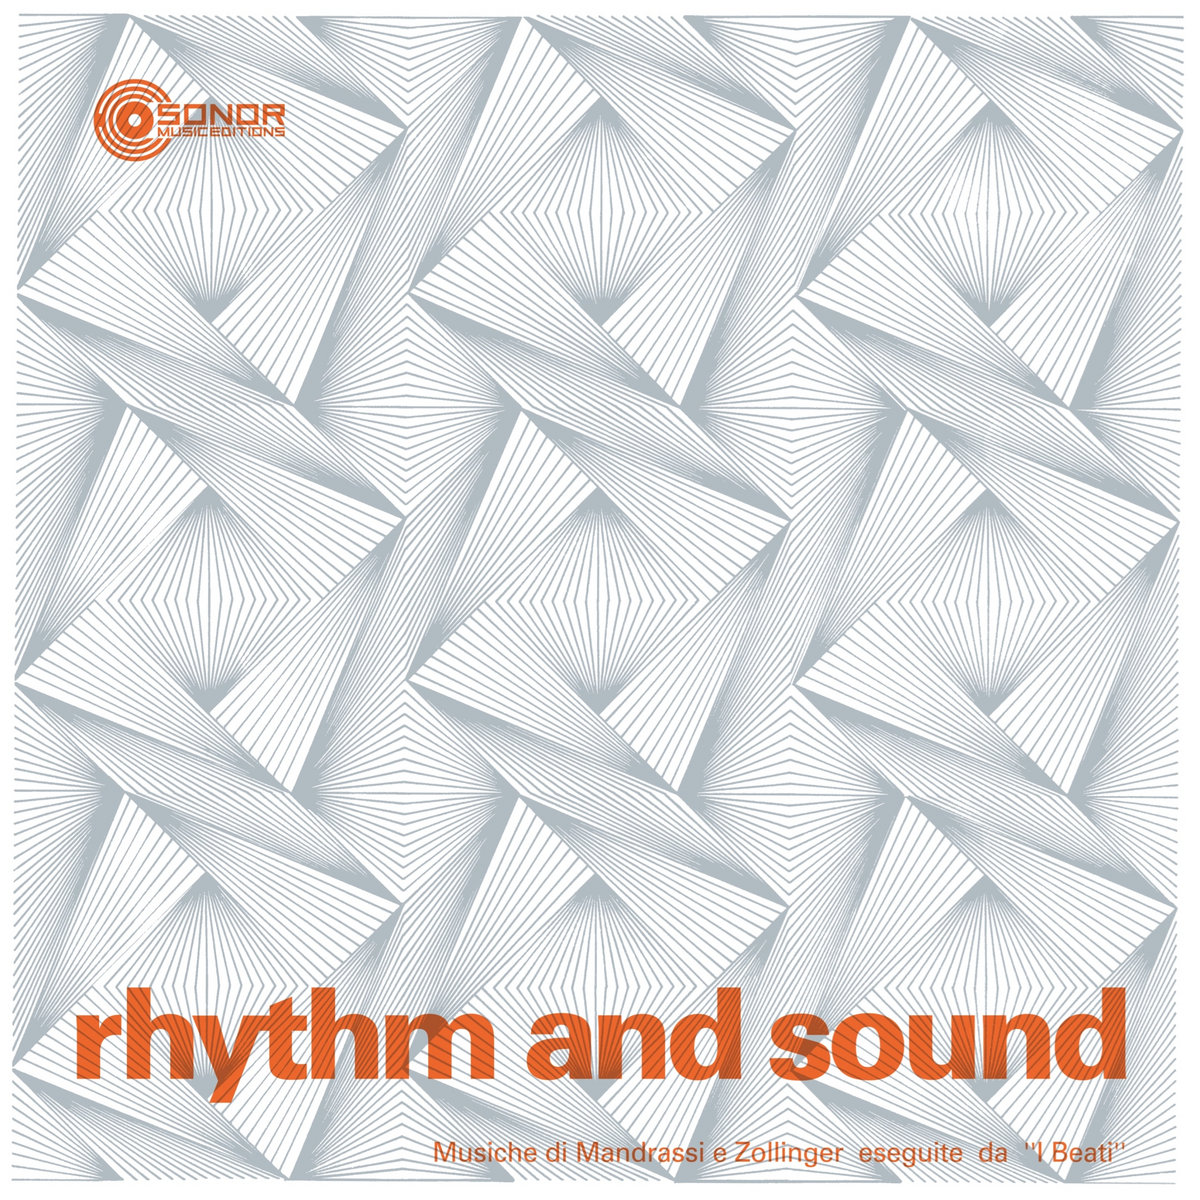 cover rhythm sound